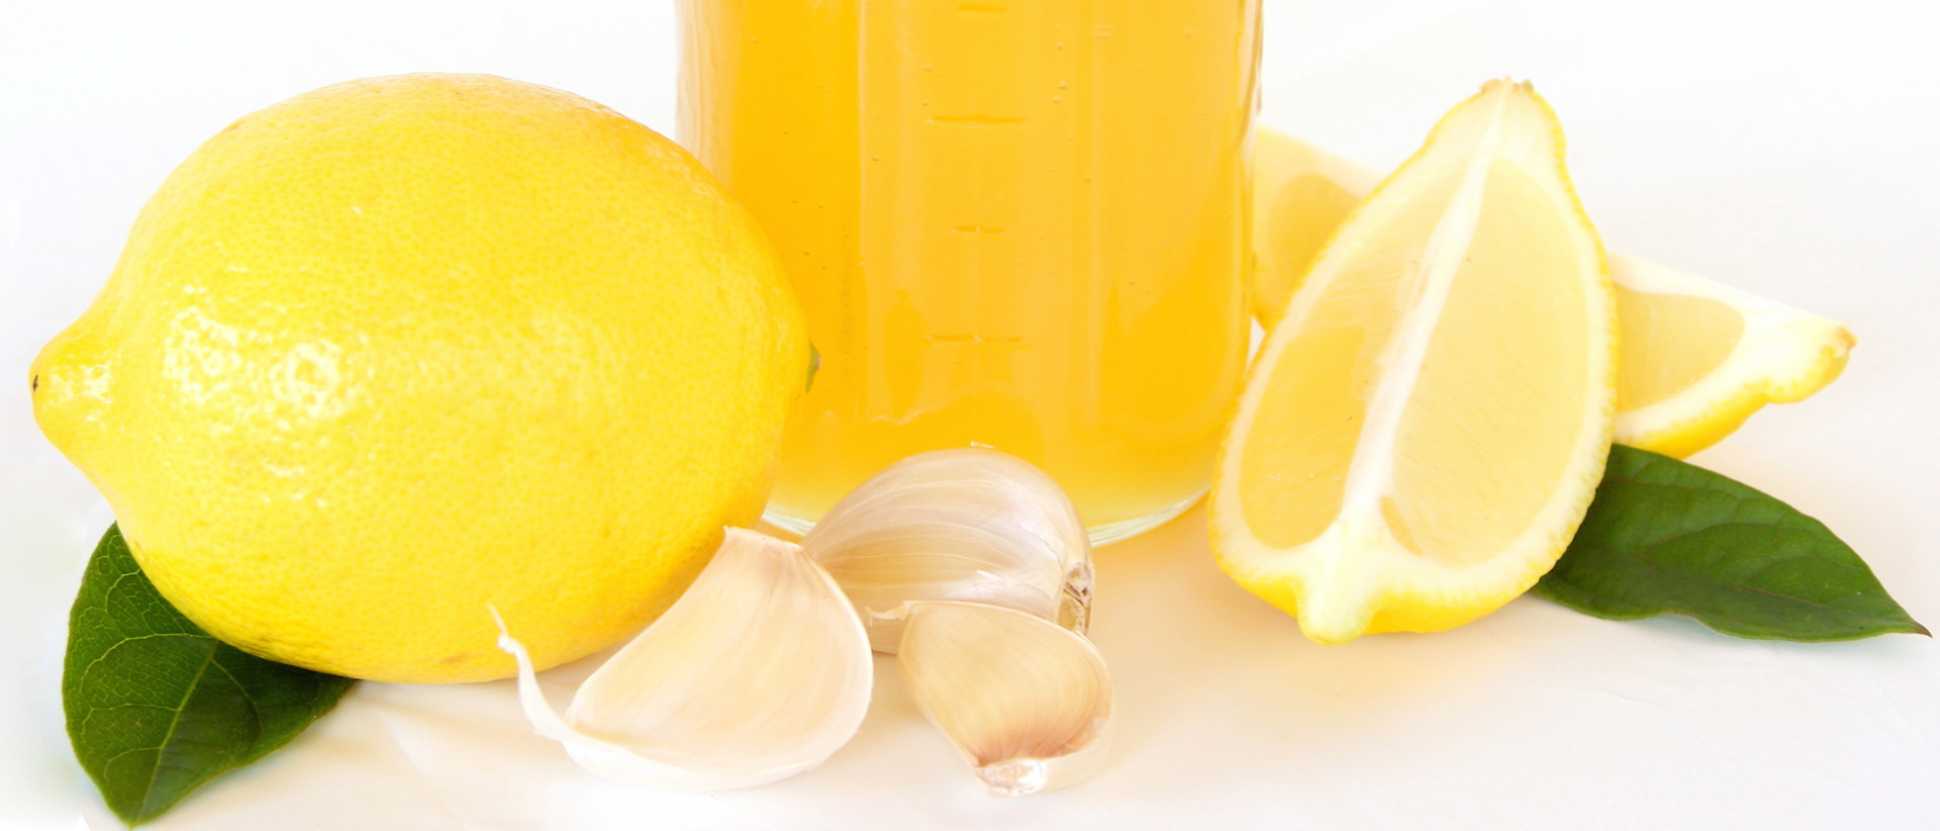 161201-Simple-combination-of-garlic-and-lemon-juice-lowers-CVD-risk-factorsjpg